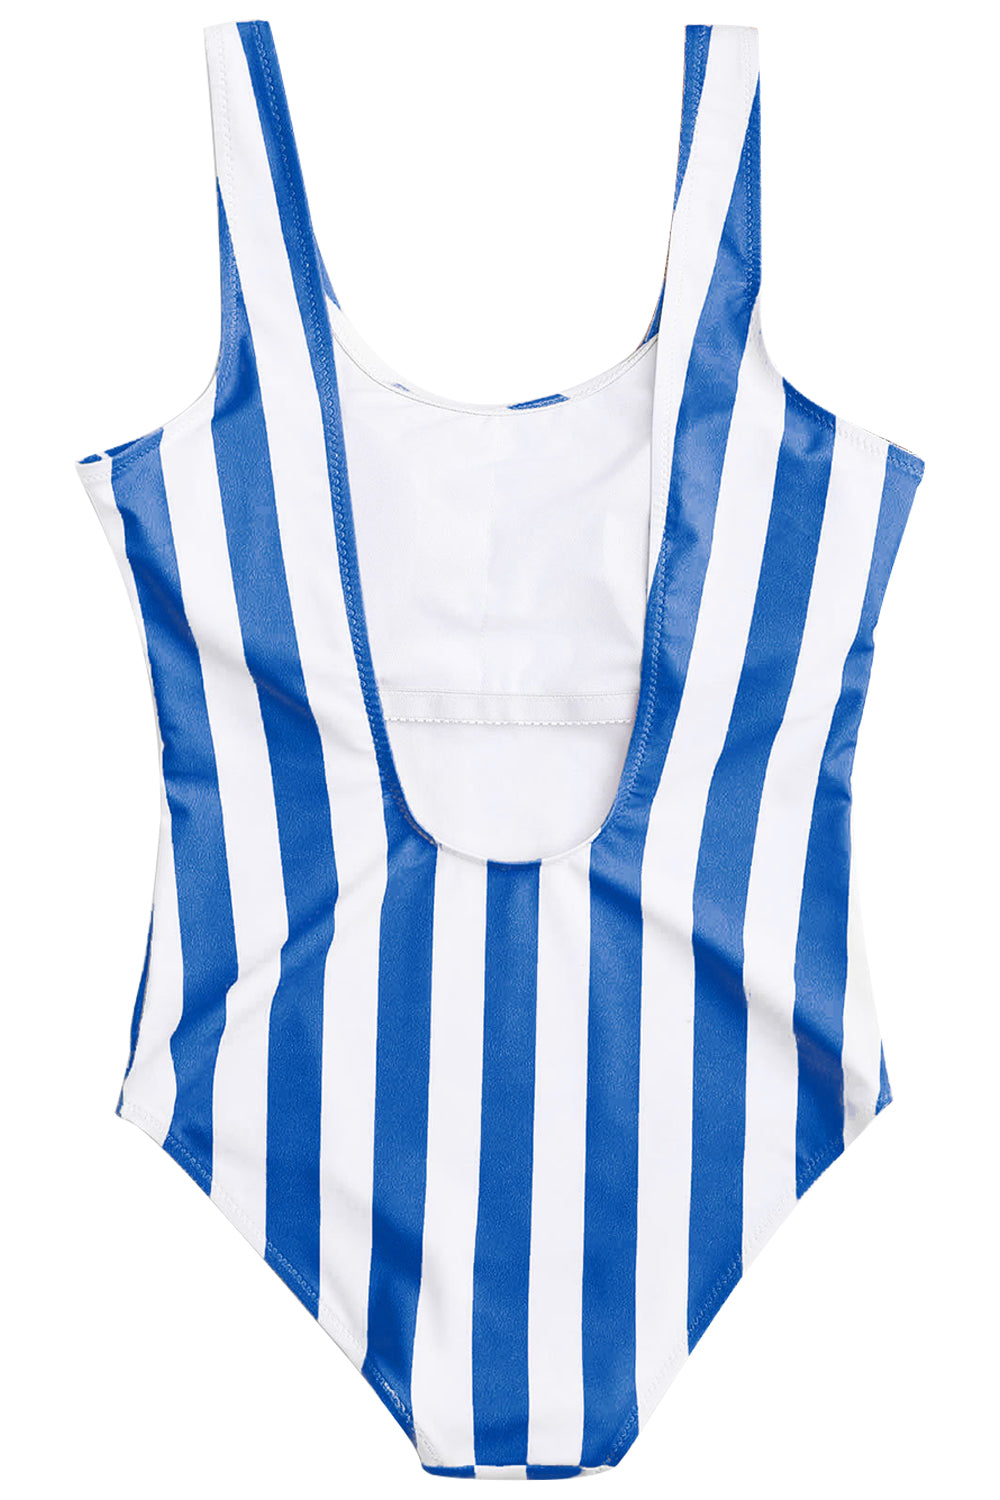 Iyasson Stripe Printing Backless One-piece swimsuit